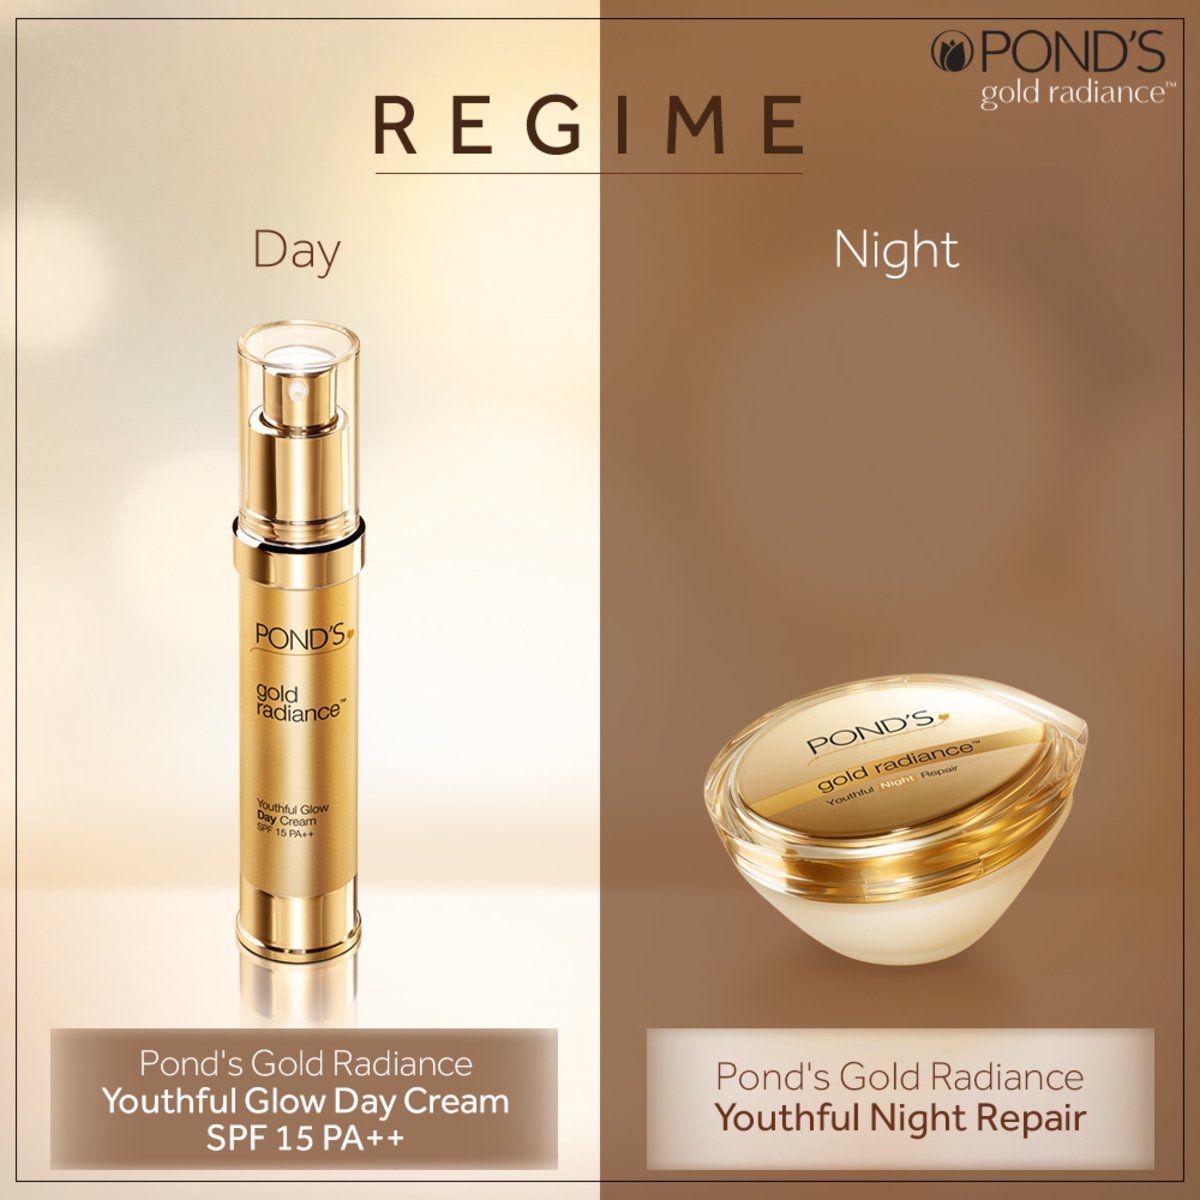 Pond's Gold Radiance Youthful Night Repair Cream 50 g